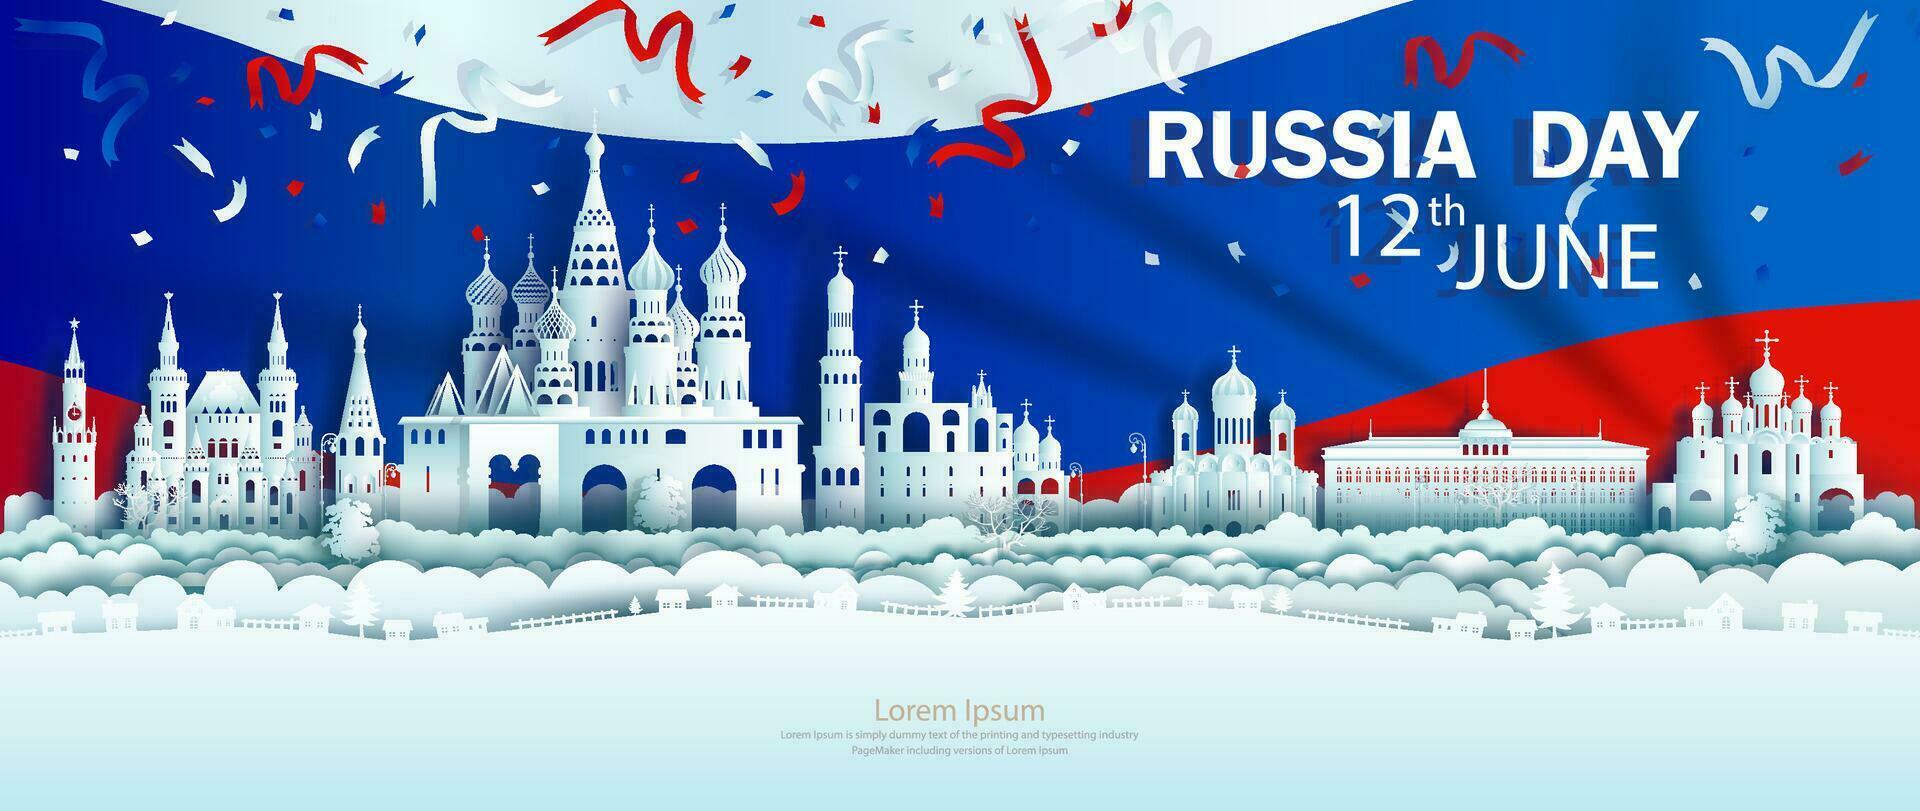 illustration årsdag firande oberoende ryssland dag i bakgrund ryssland flagga. vektor